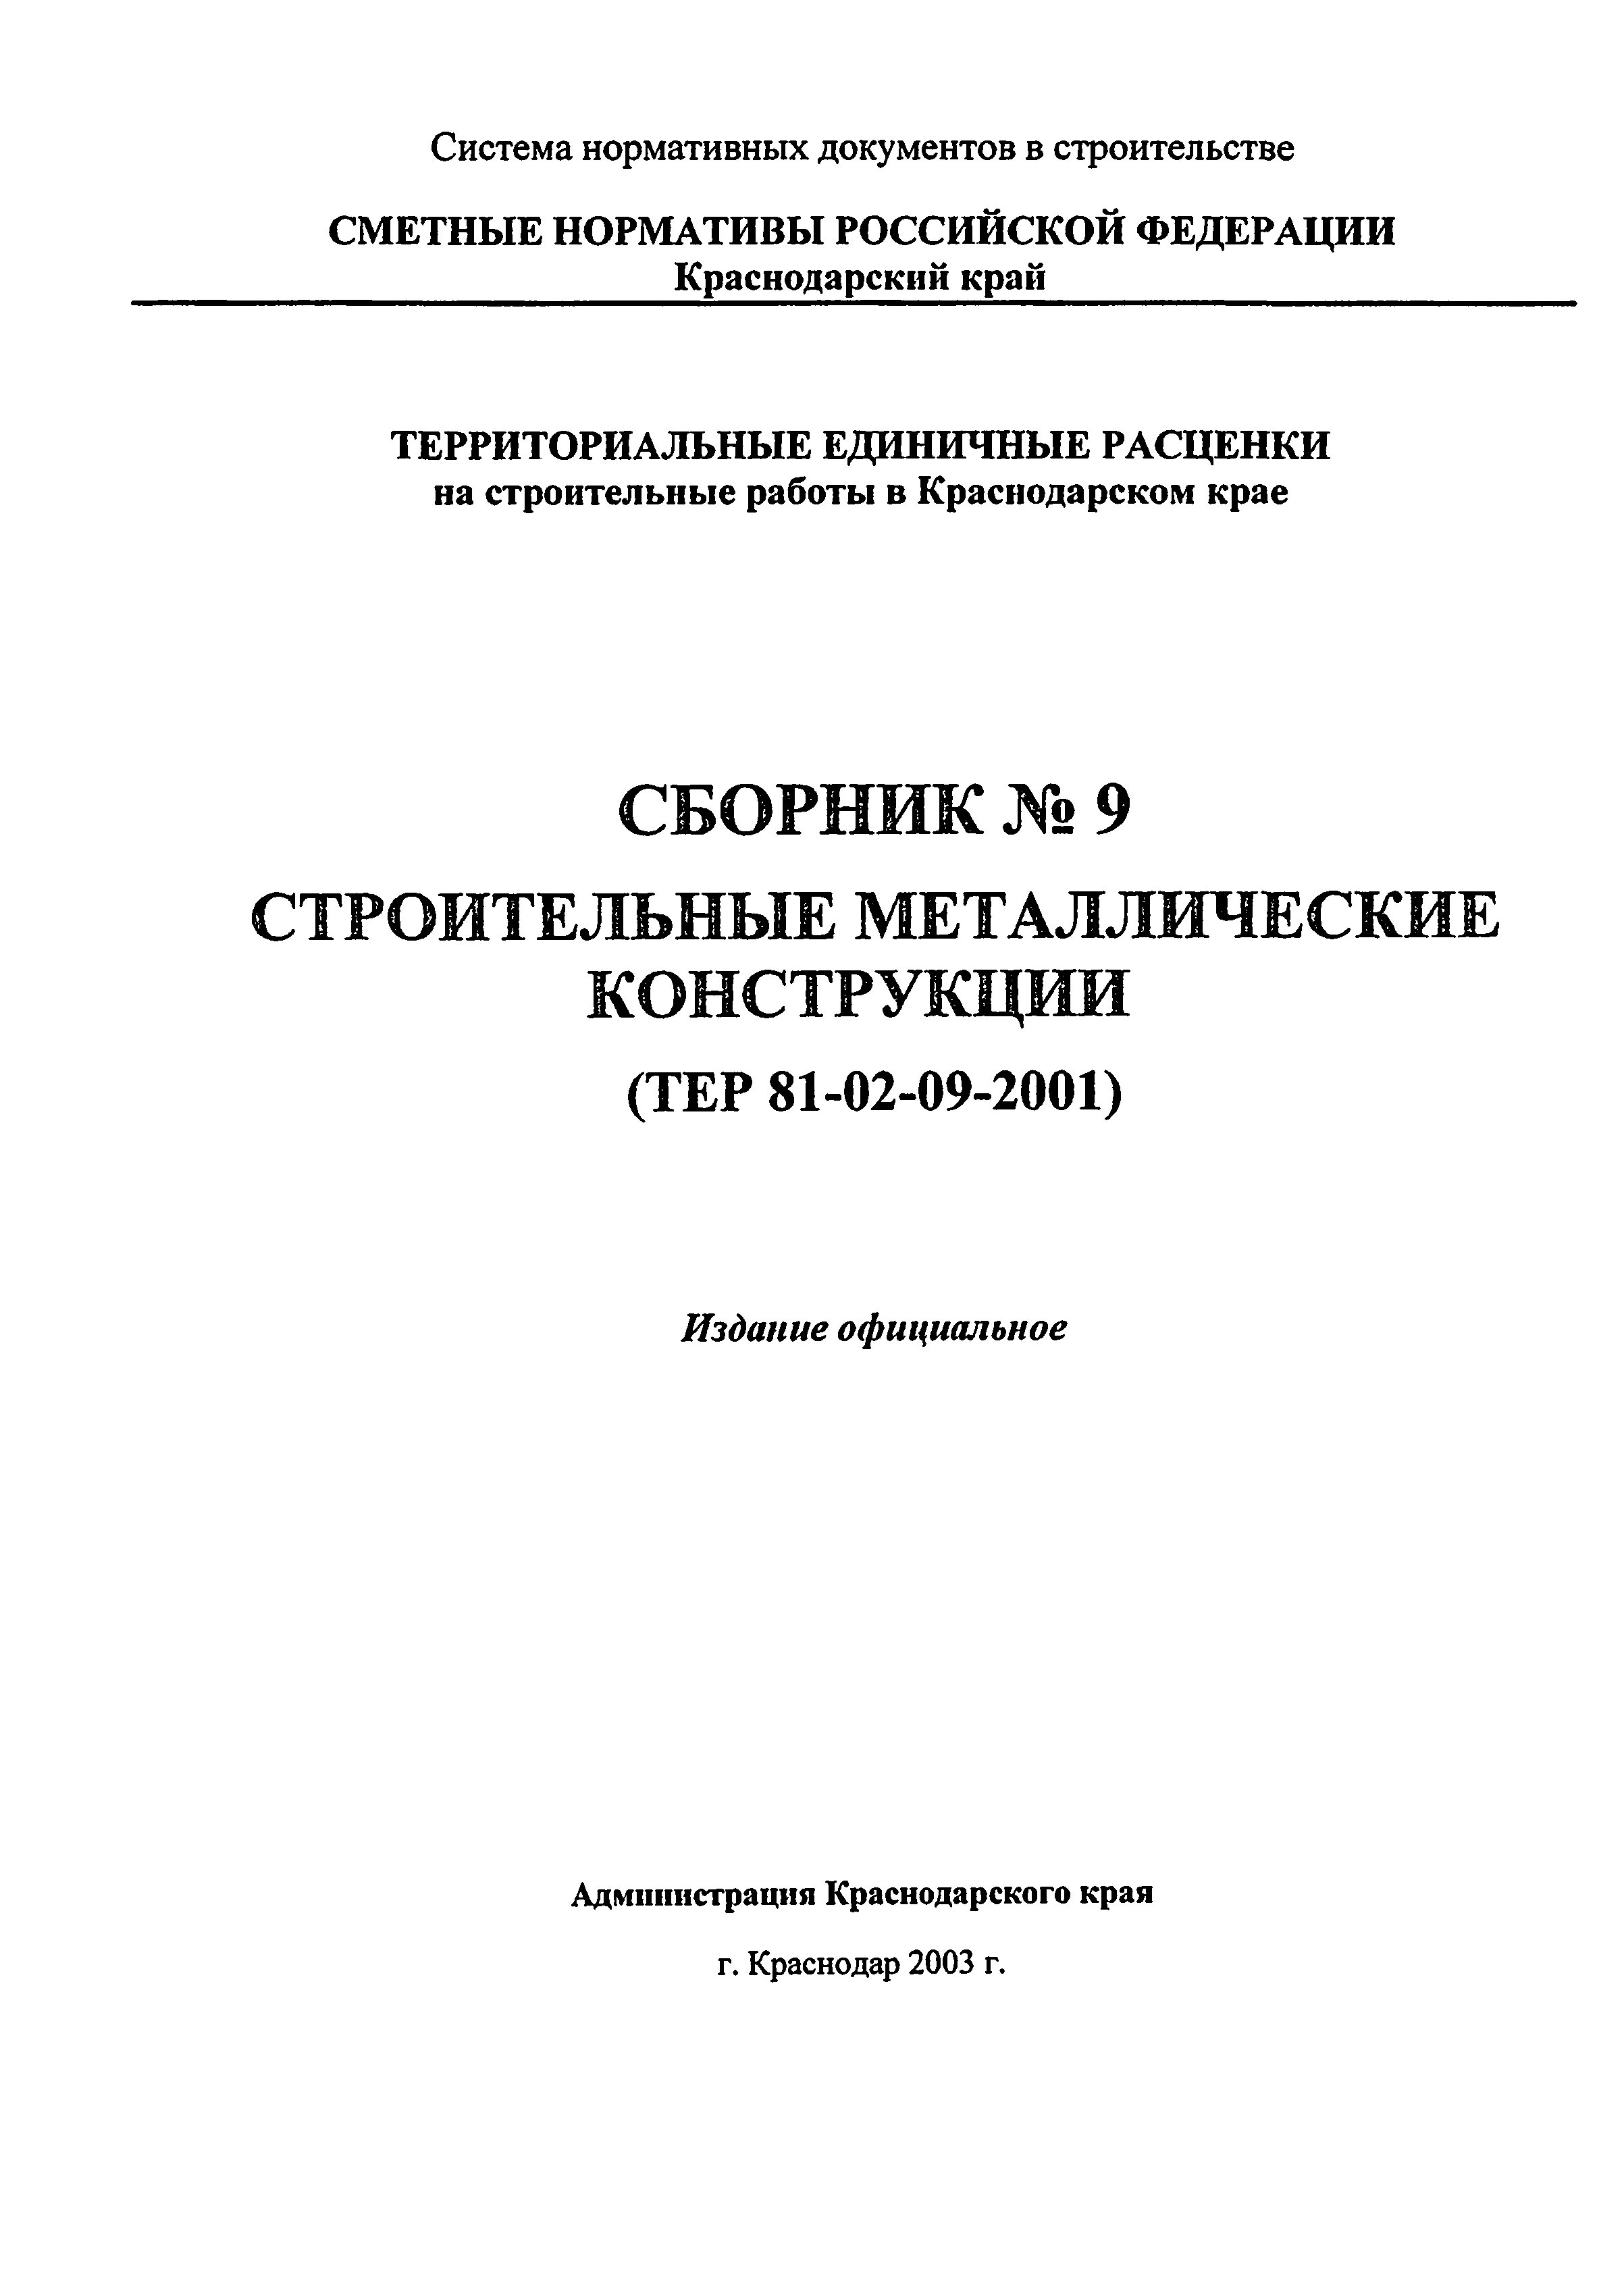 ТЕР Краснодарский край 2001-09